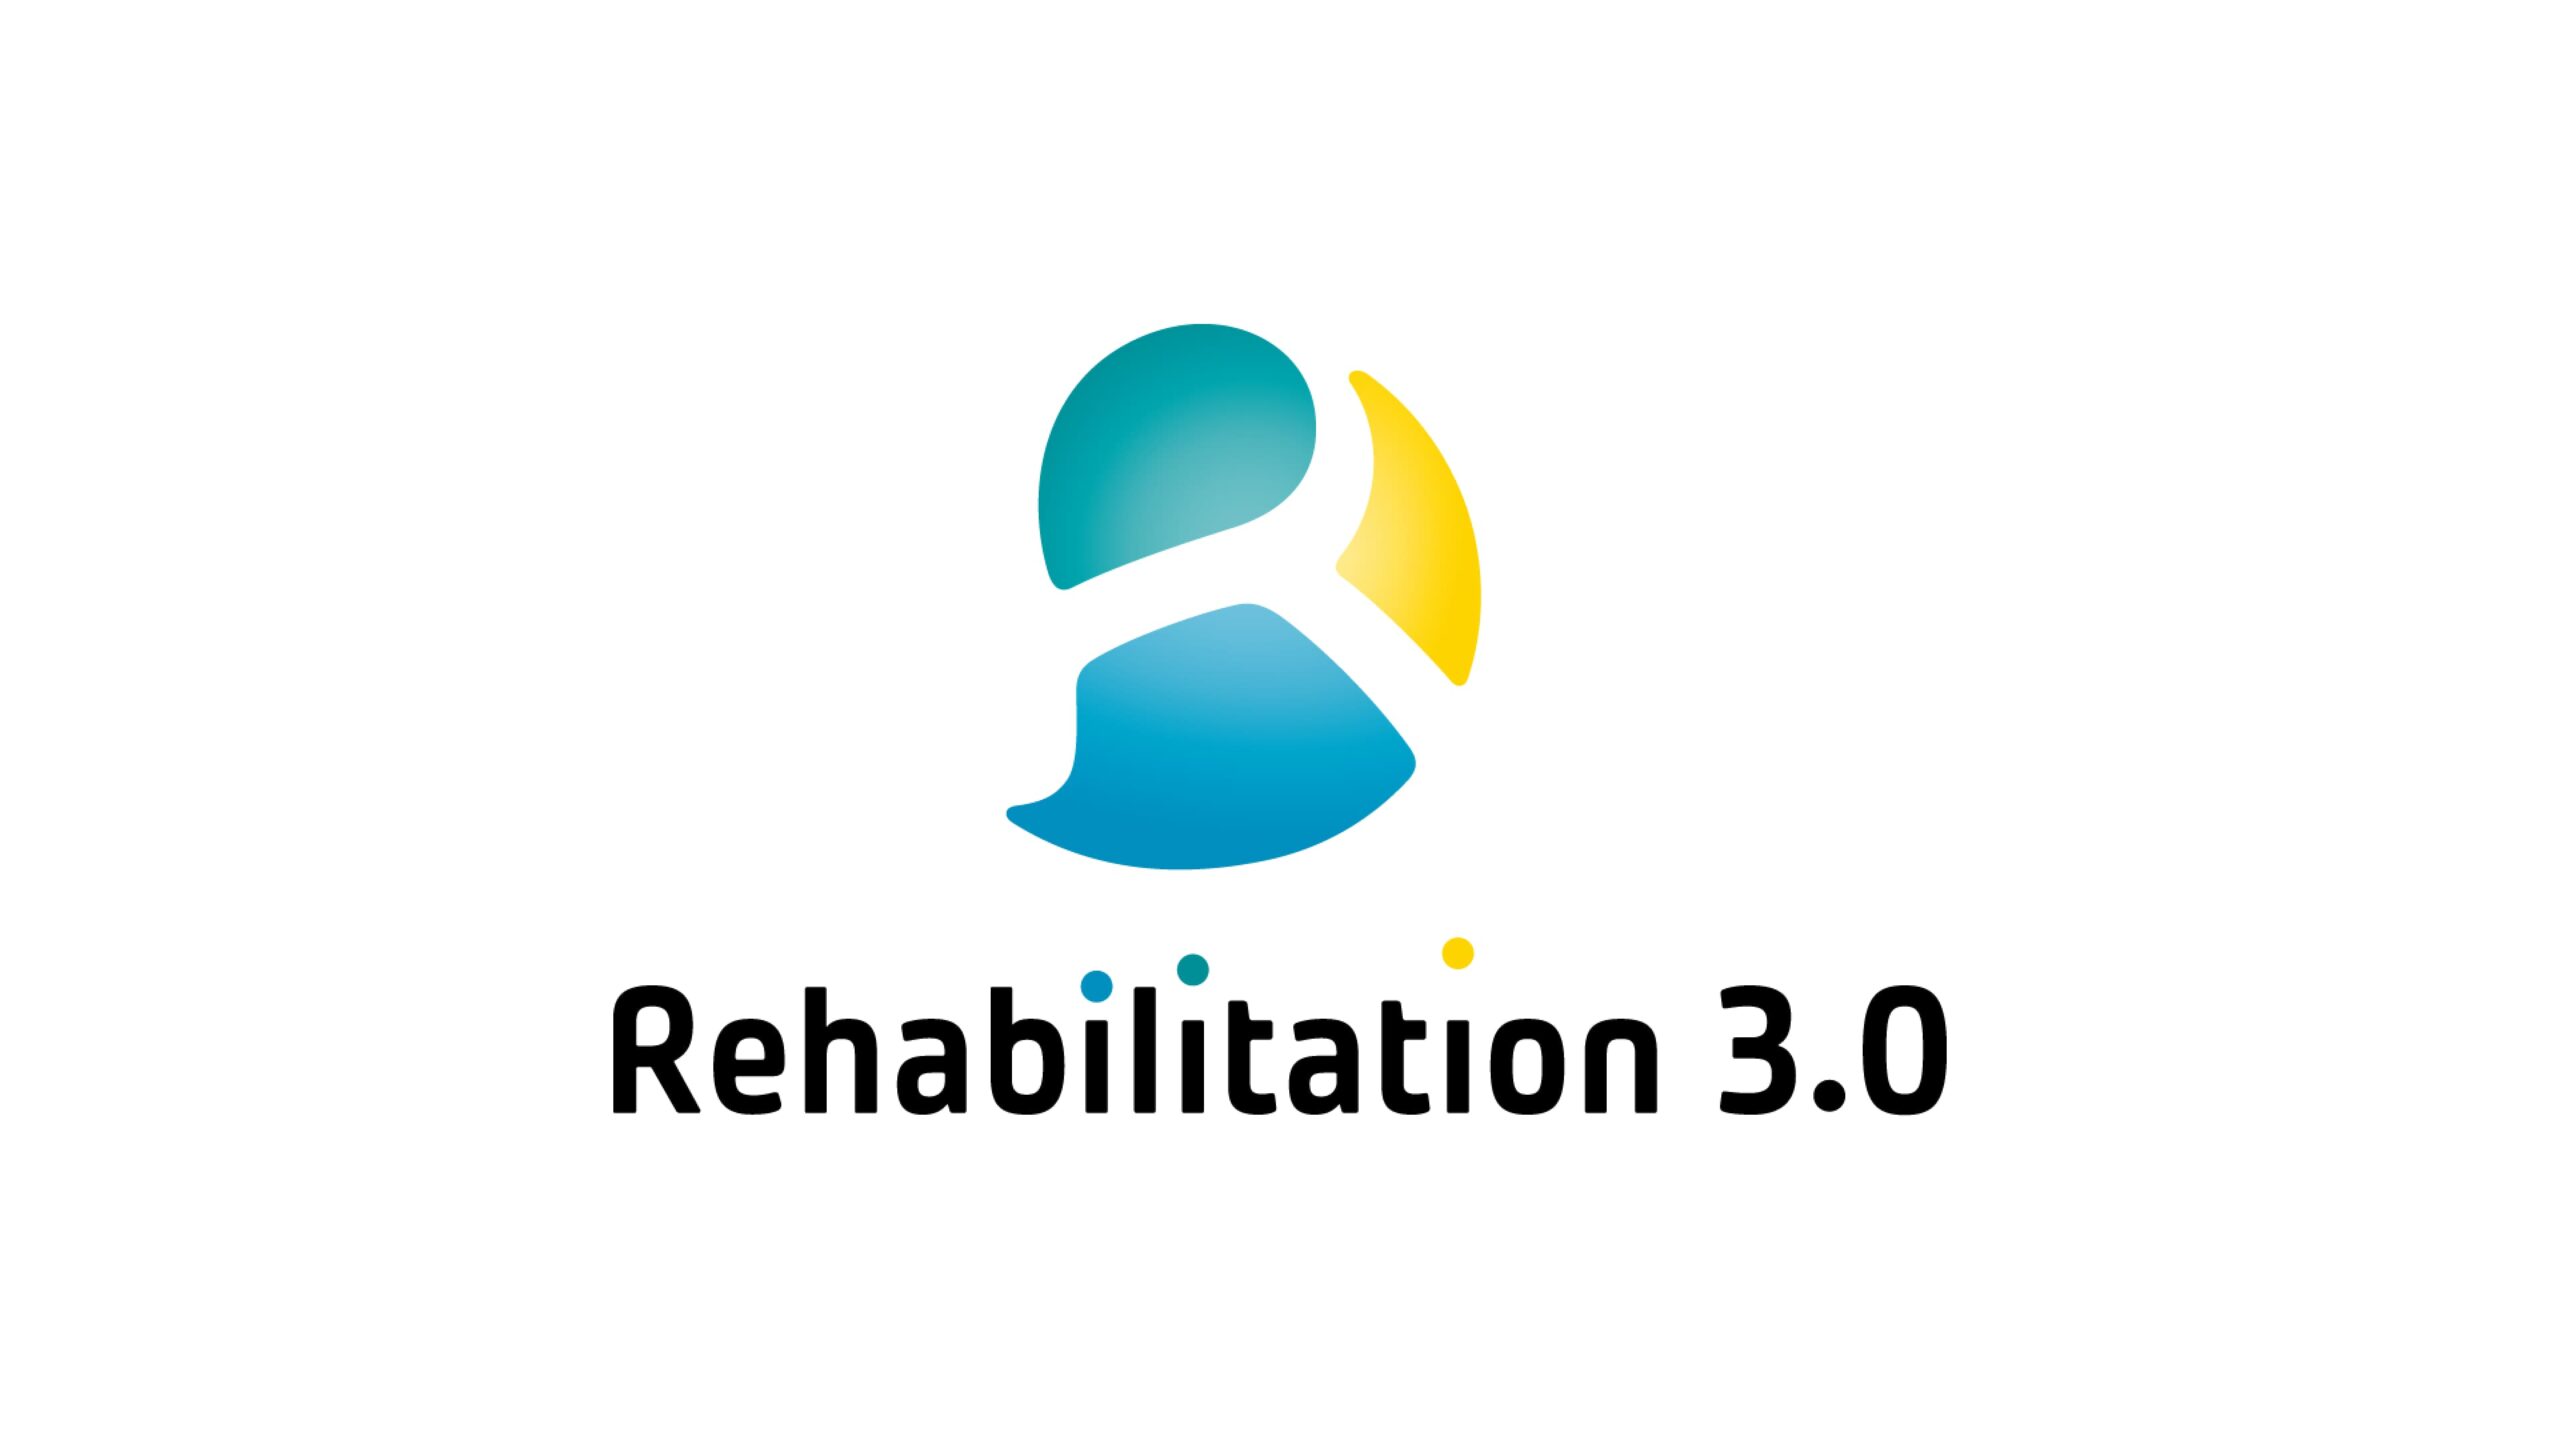 Rehabilitation3.0株式会社が第三者割当増資にて資金調達を実施